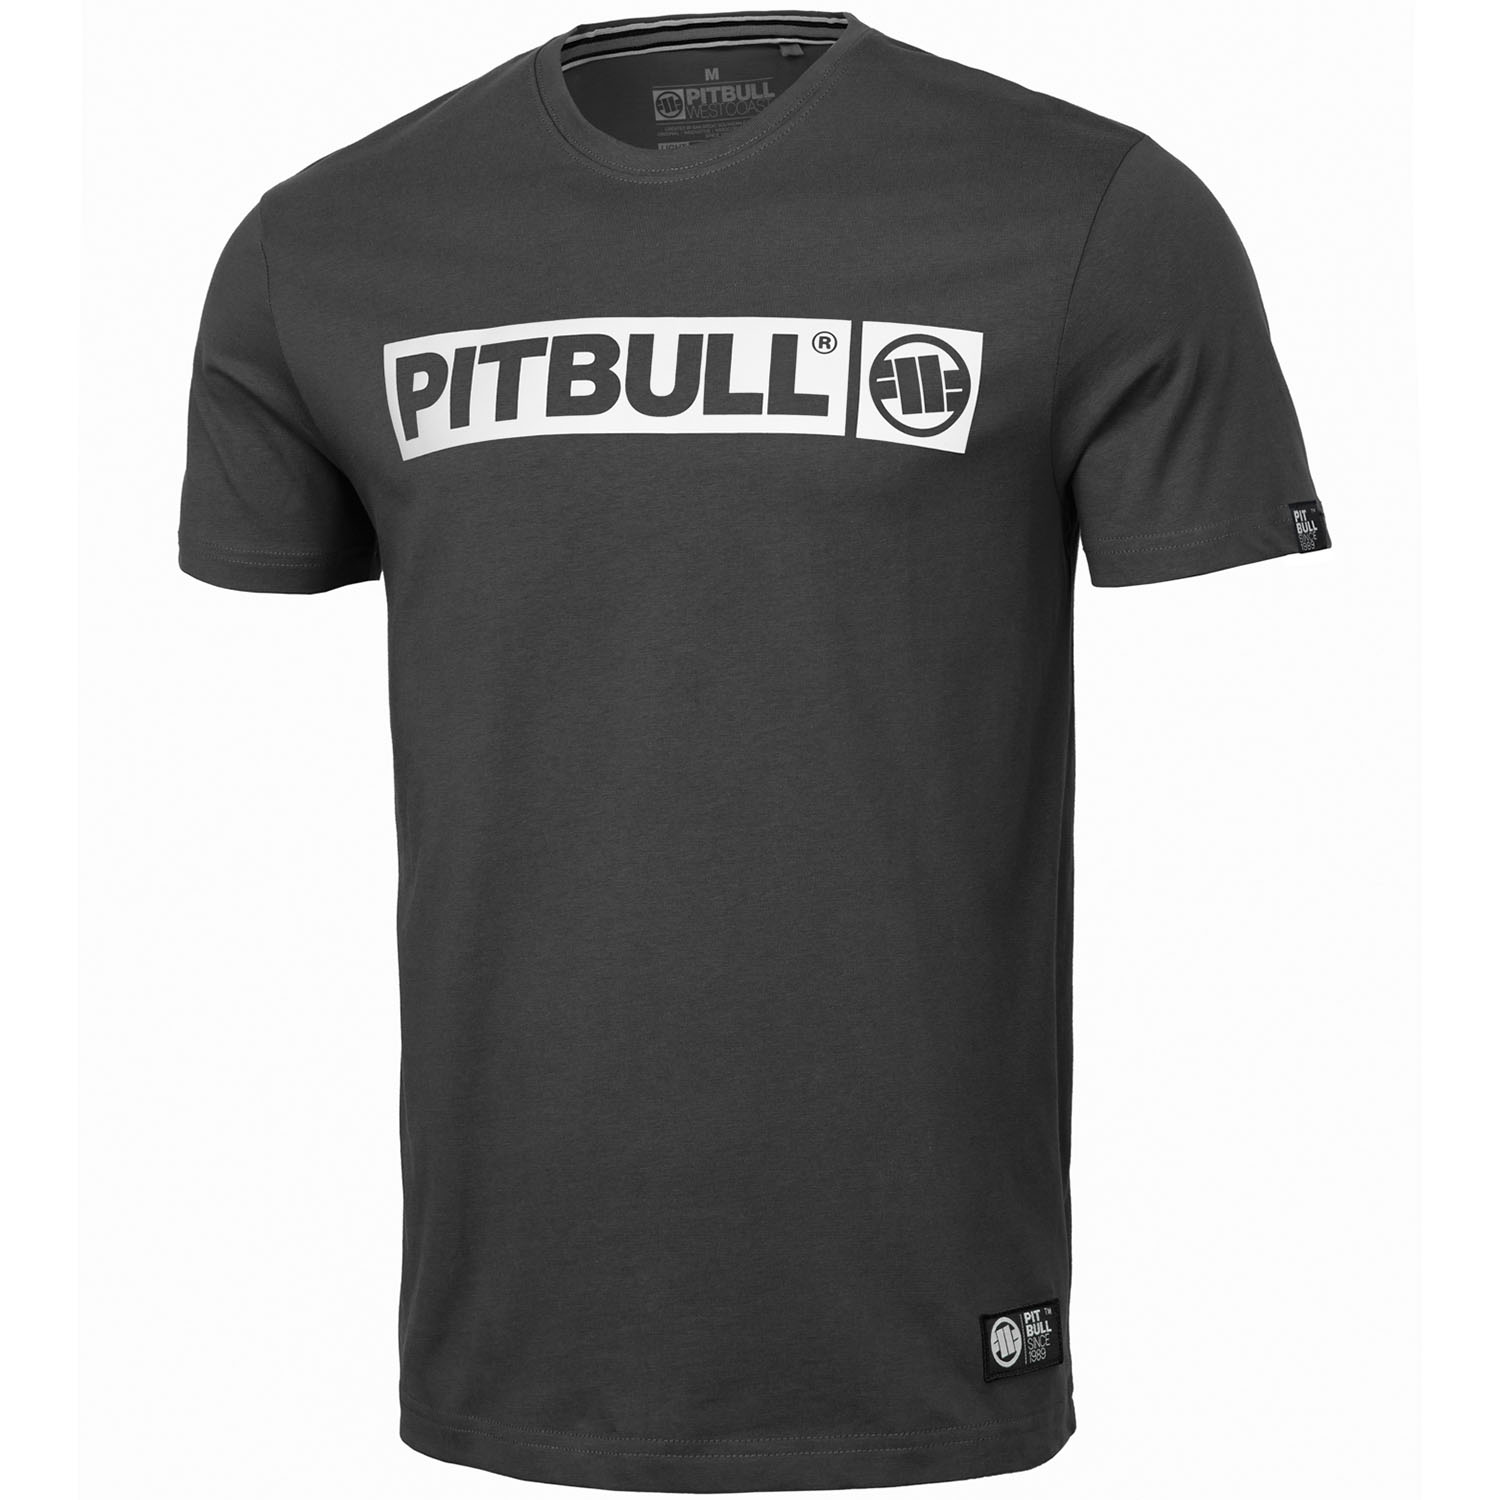 Pit Bull West Coast T-Shirt, Hilltop S70, dark grey